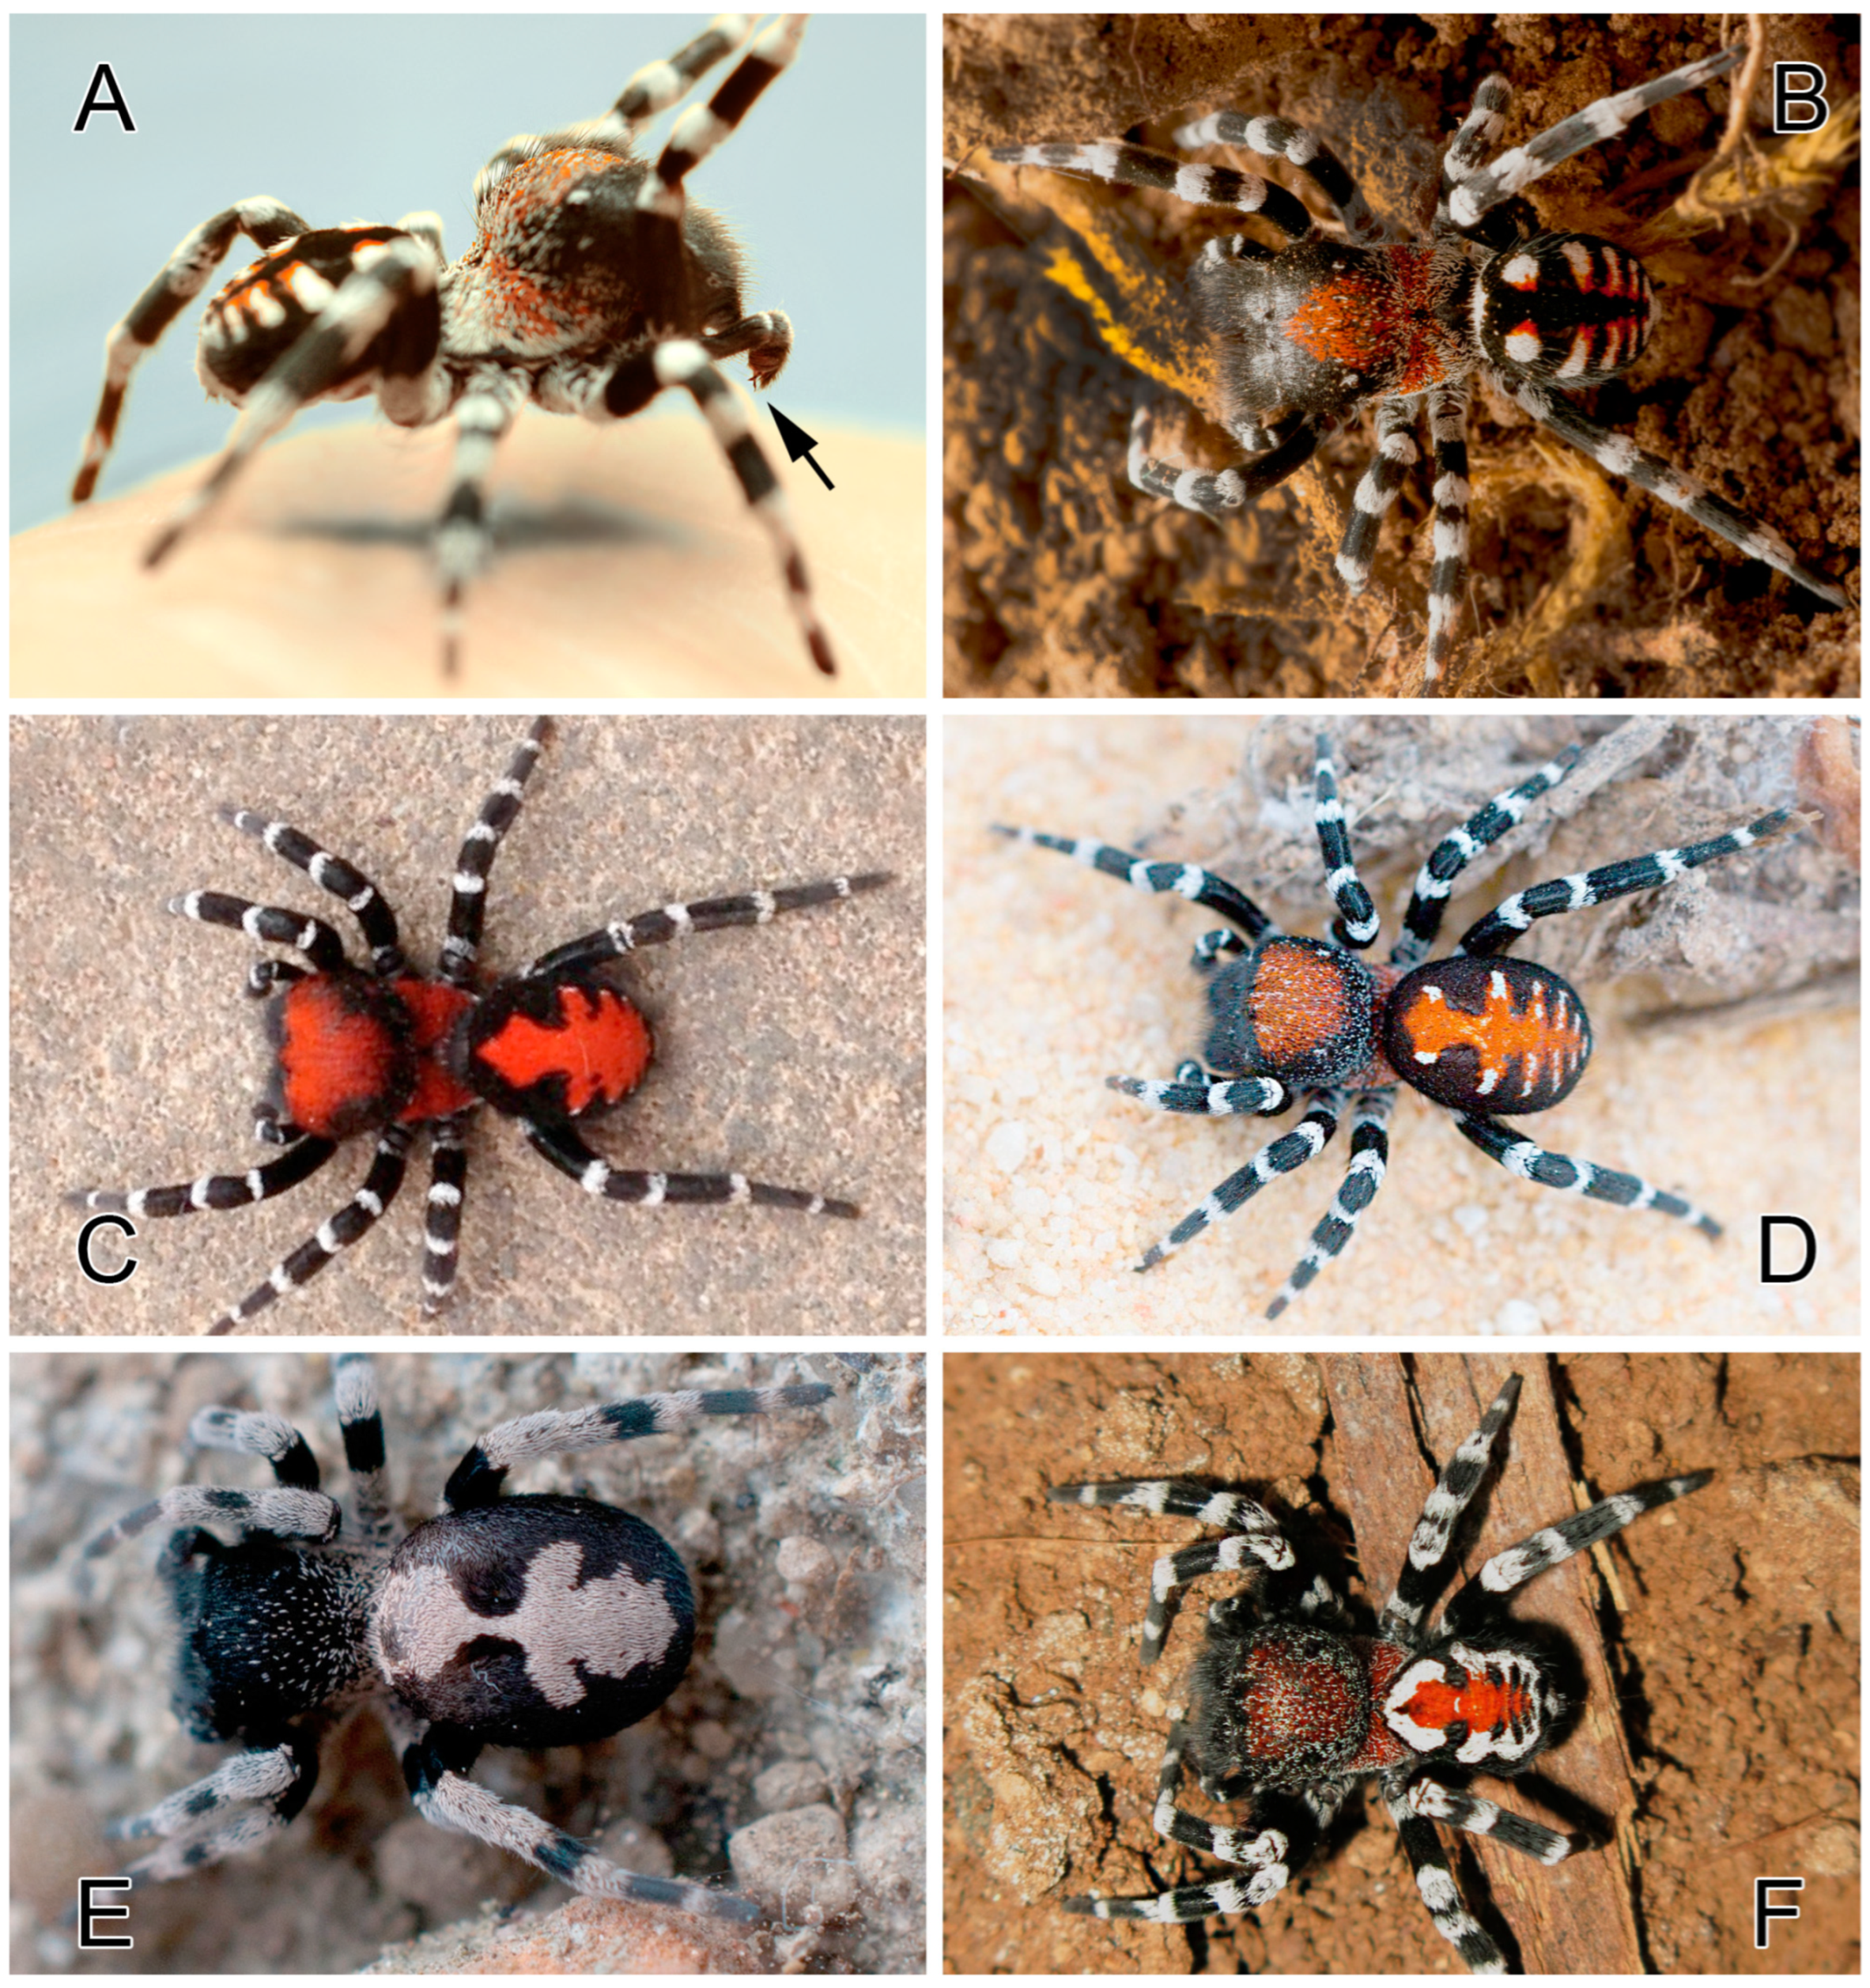 Diversity | Free Full-Text | A Study in Scarlet: Integrative Taxonomy of  the Spider Genus Loureedia (Araneae: Eresidae)